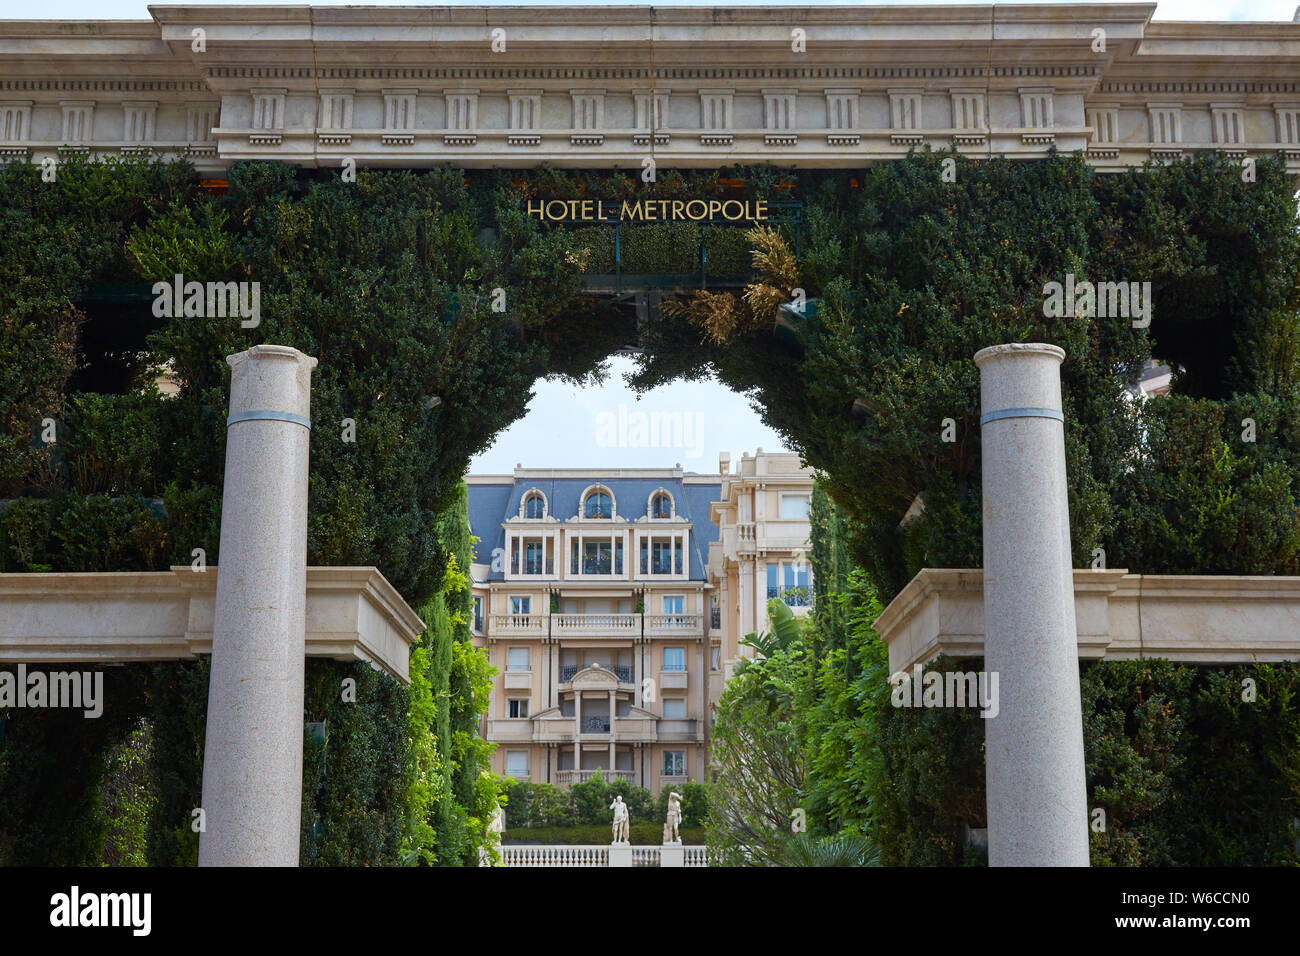 MONTE CARLO, MONACO - AUGUST 20, 2016: Metropole, luxury hotel entrance with columns in Monte Carlo, Monaco. Stock Photo